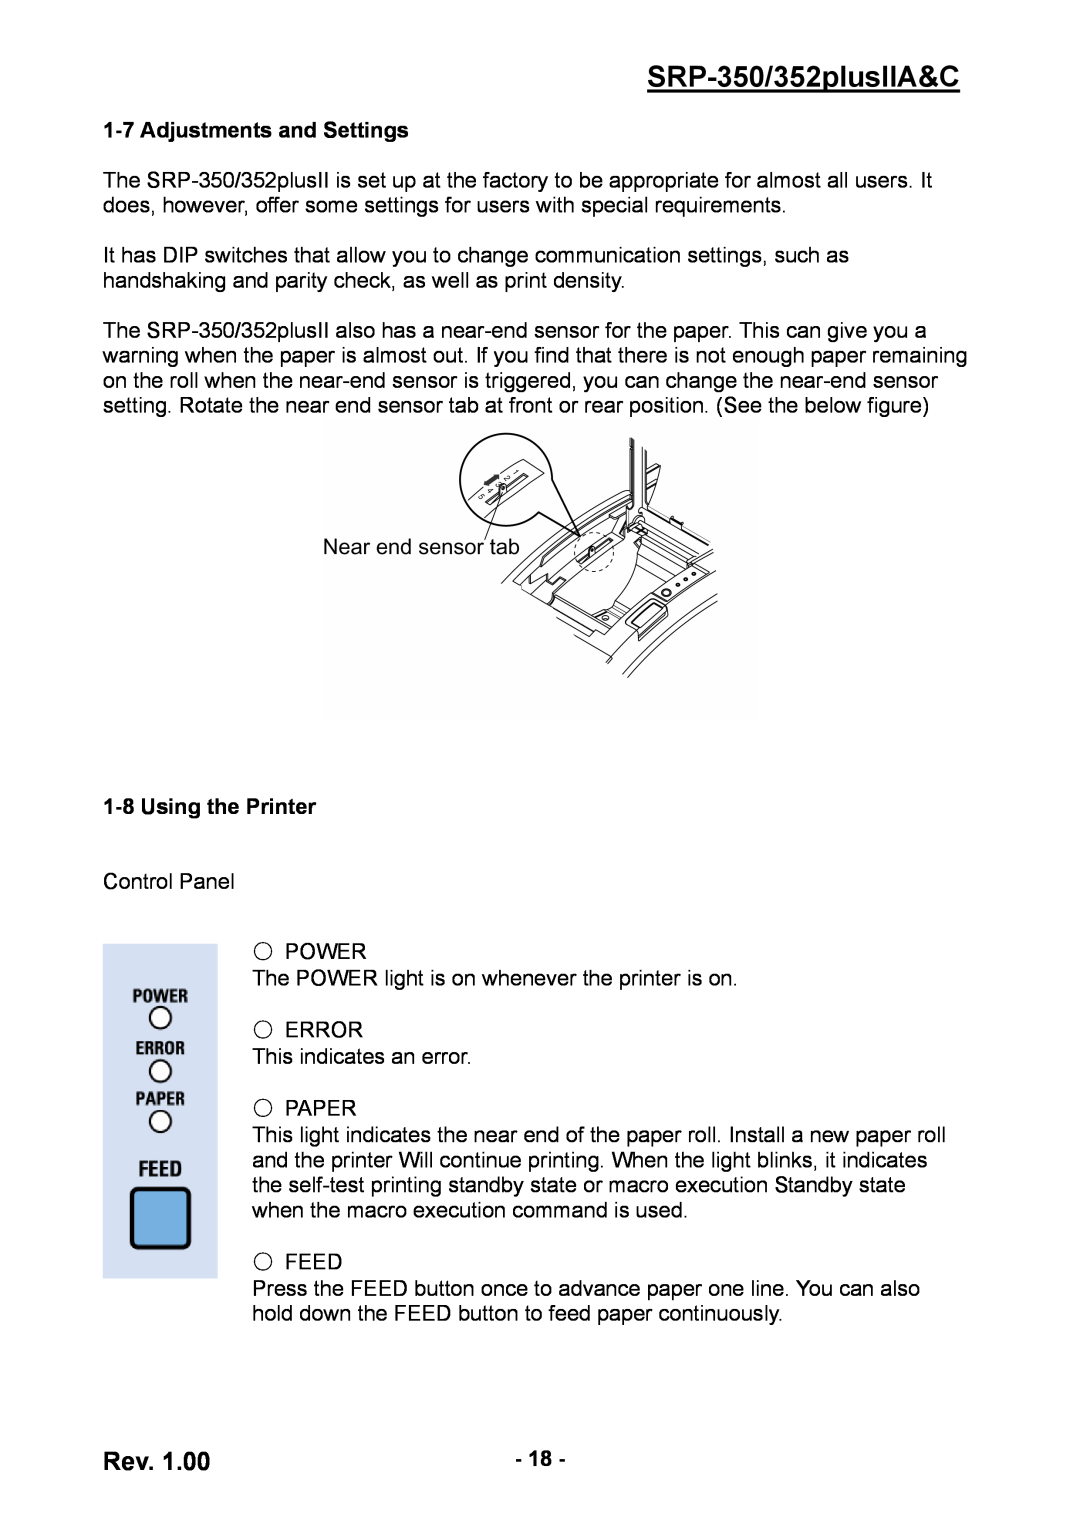 BIXOLON SRP-352 user manual Adjustments and Settings, Using the Printer, SRP-350/352plusIIA&C 